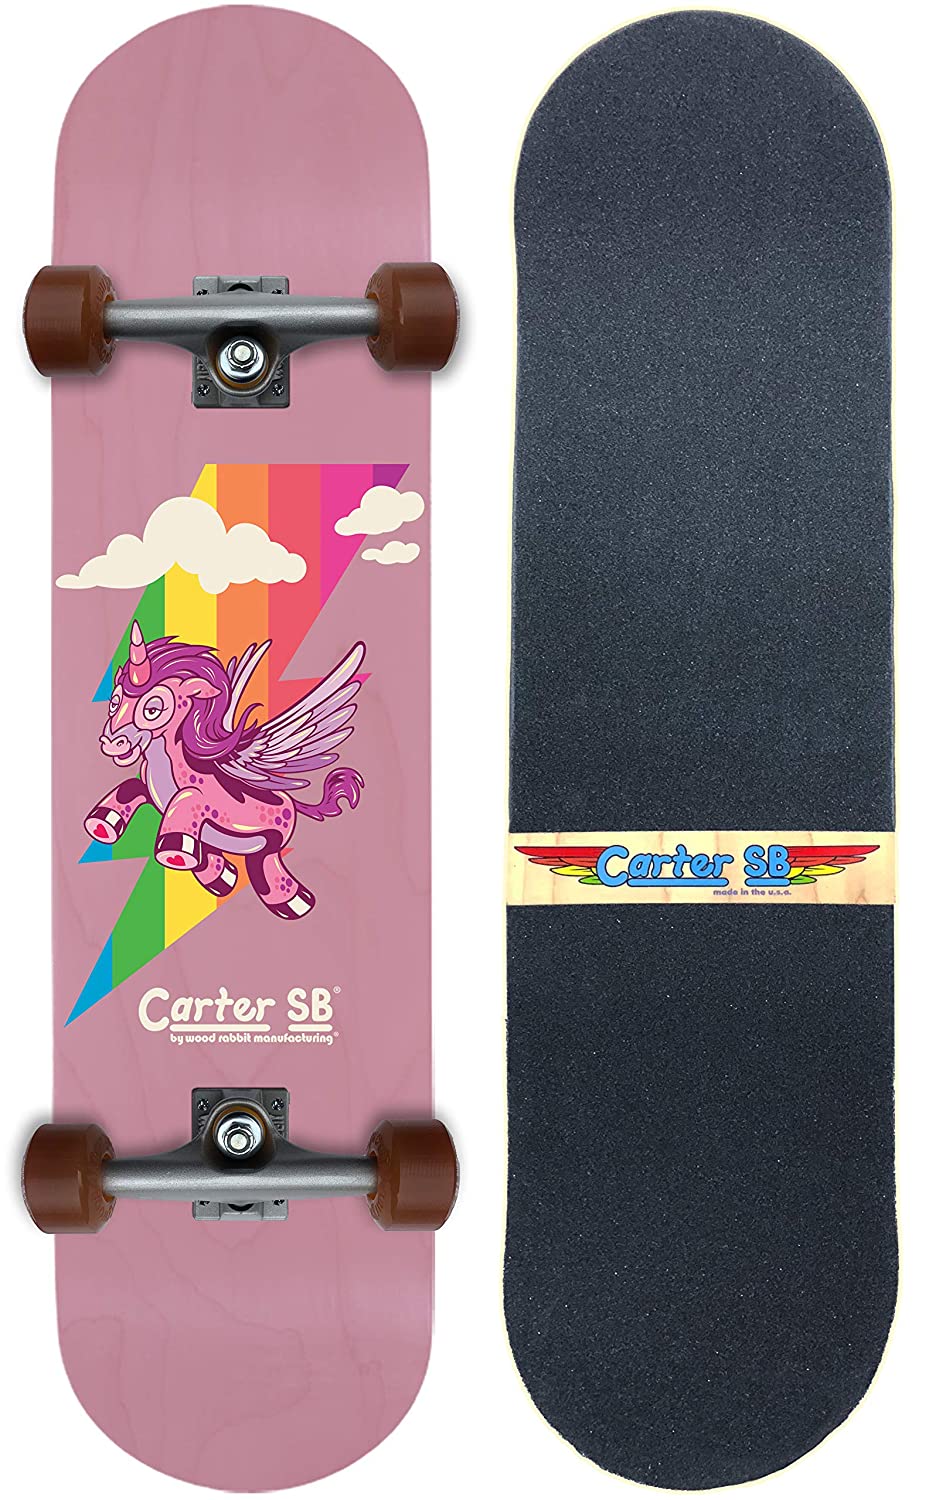 Carter SB Beginner Girls Unicorn Pink Skateboard | Kids Skateboard Materials and Design for Optimal Performance | Handmade in The USA | Great for Children and Smaller Riders